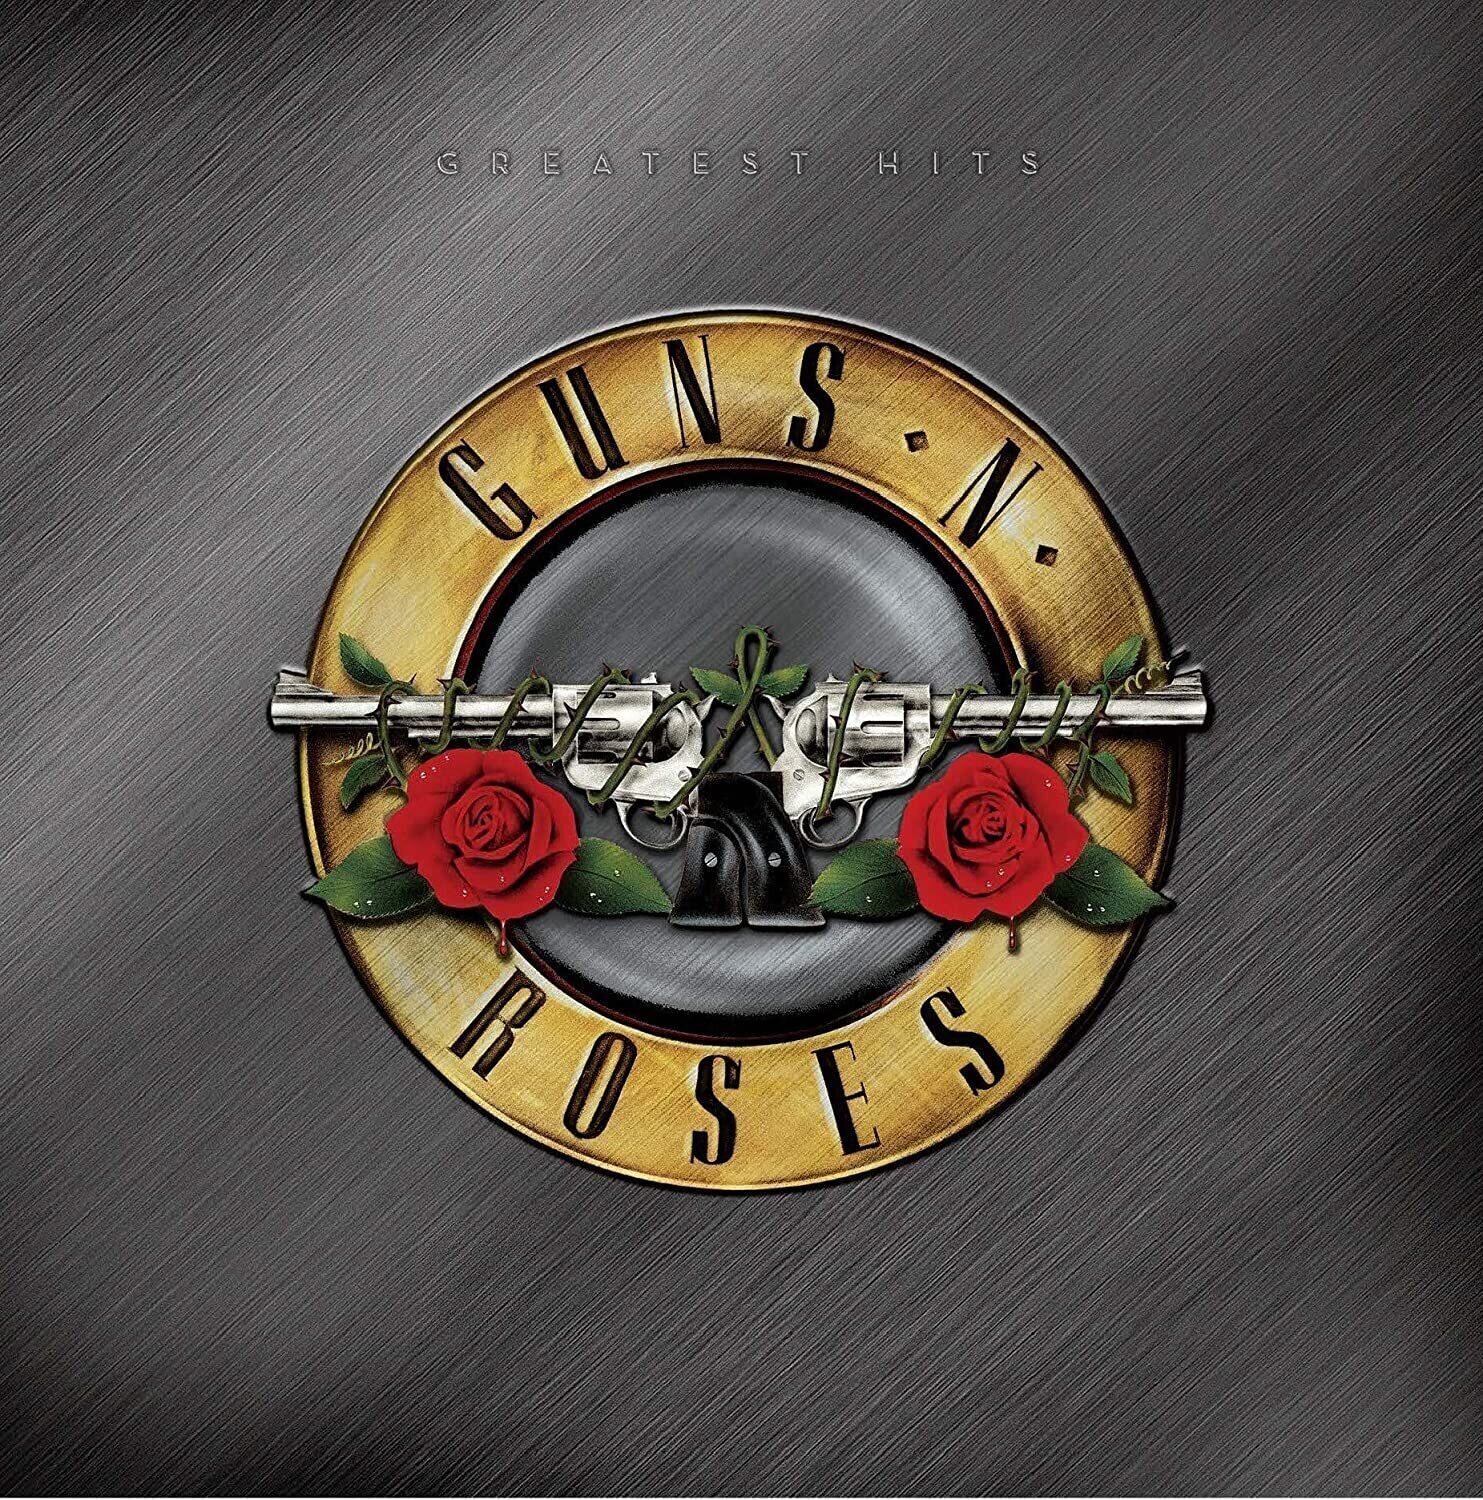 Płyta winylowa Guns N' Roses - Greatest Hits (2 LP) (180g)